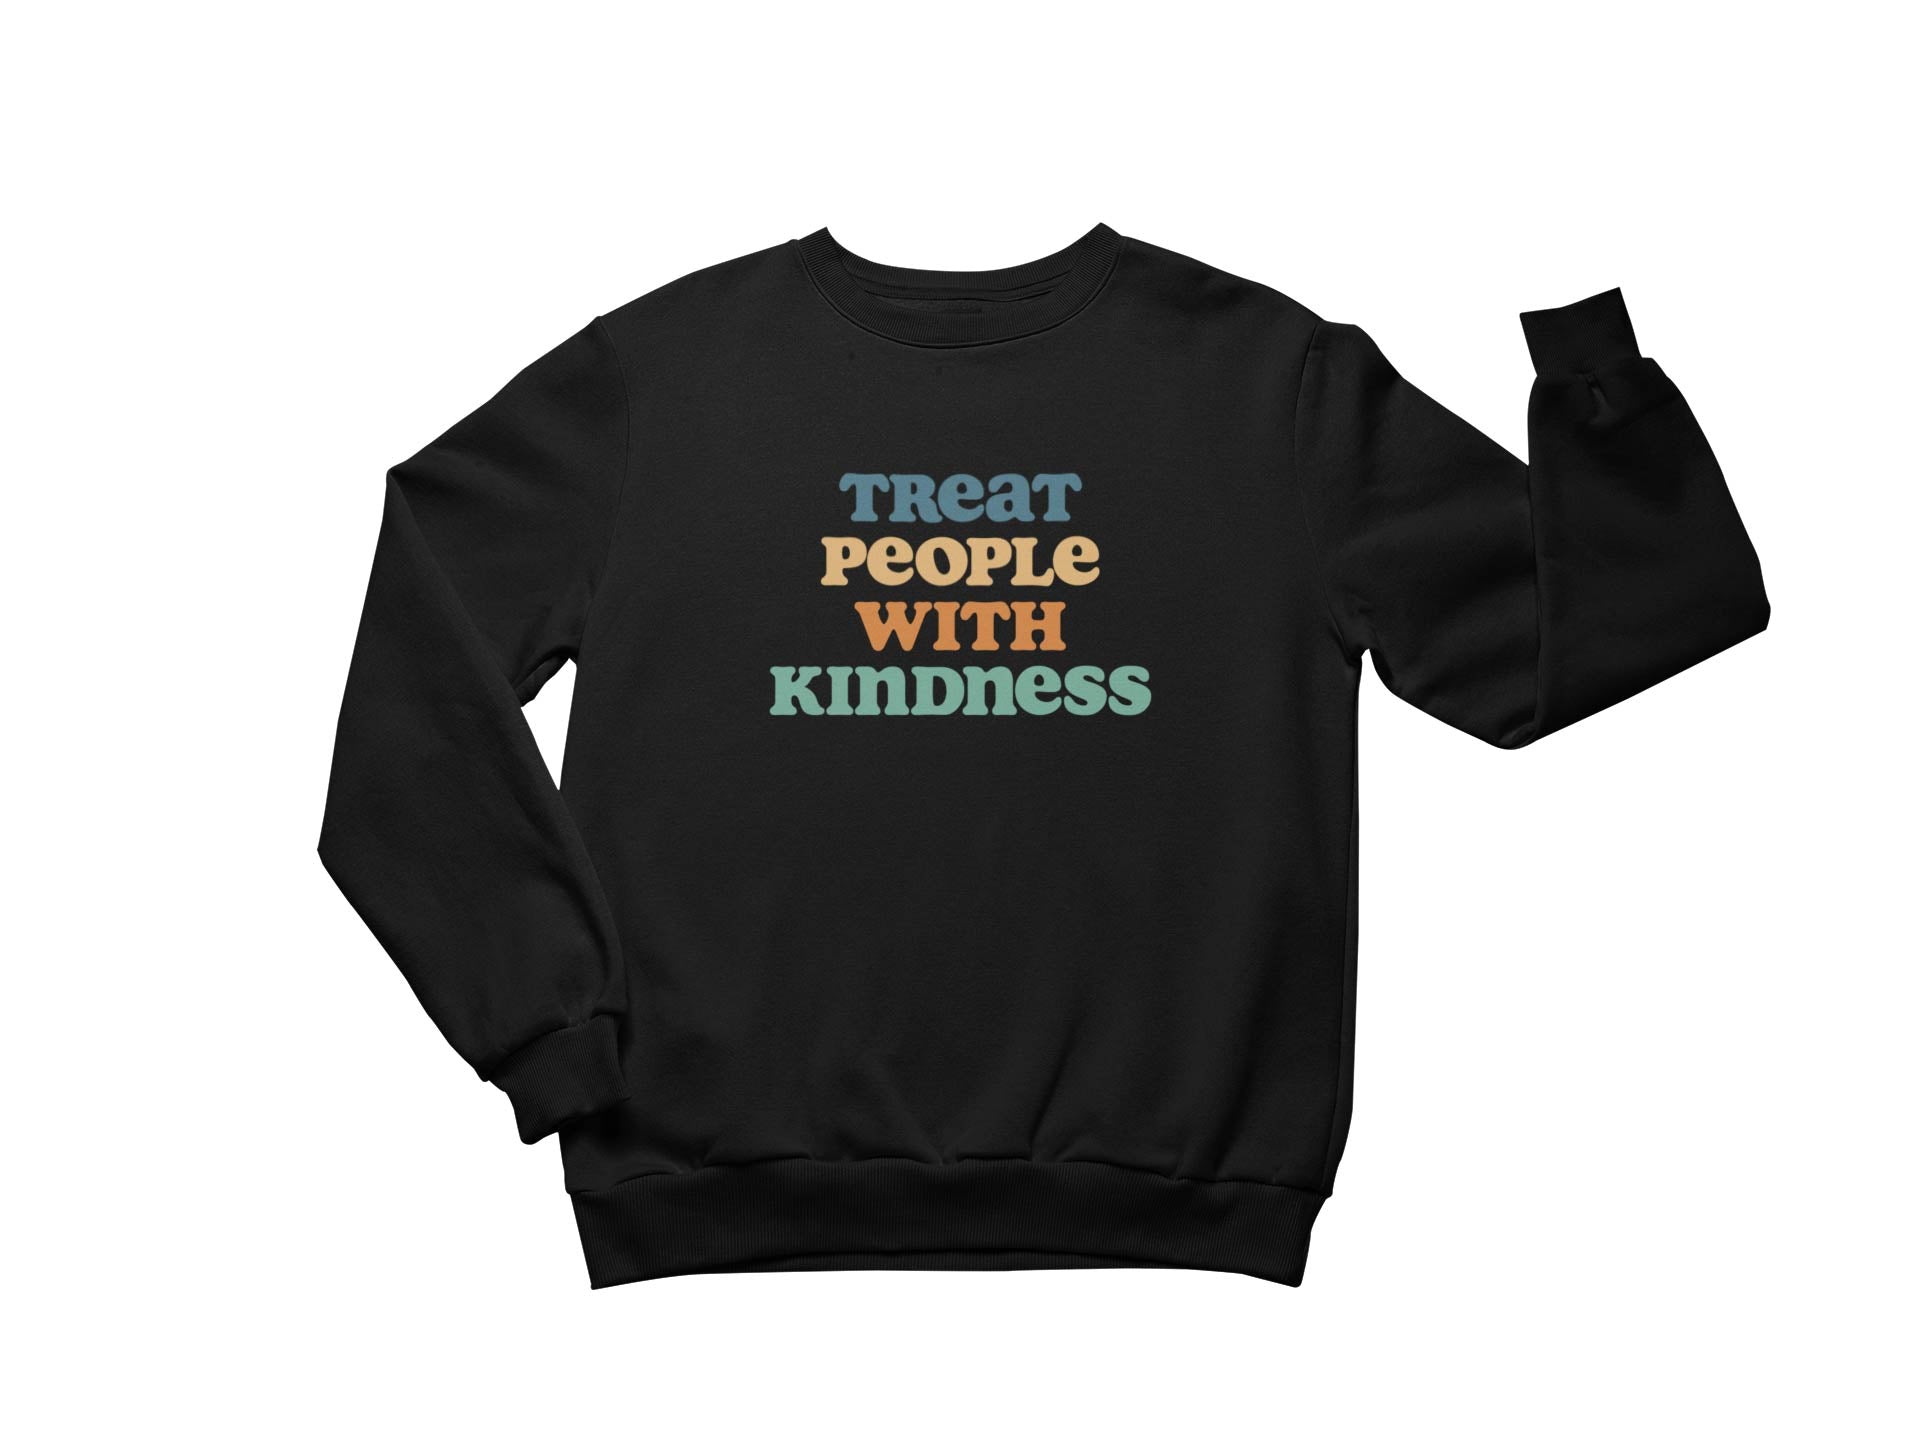 Treat People With Kindness Sweatshirt